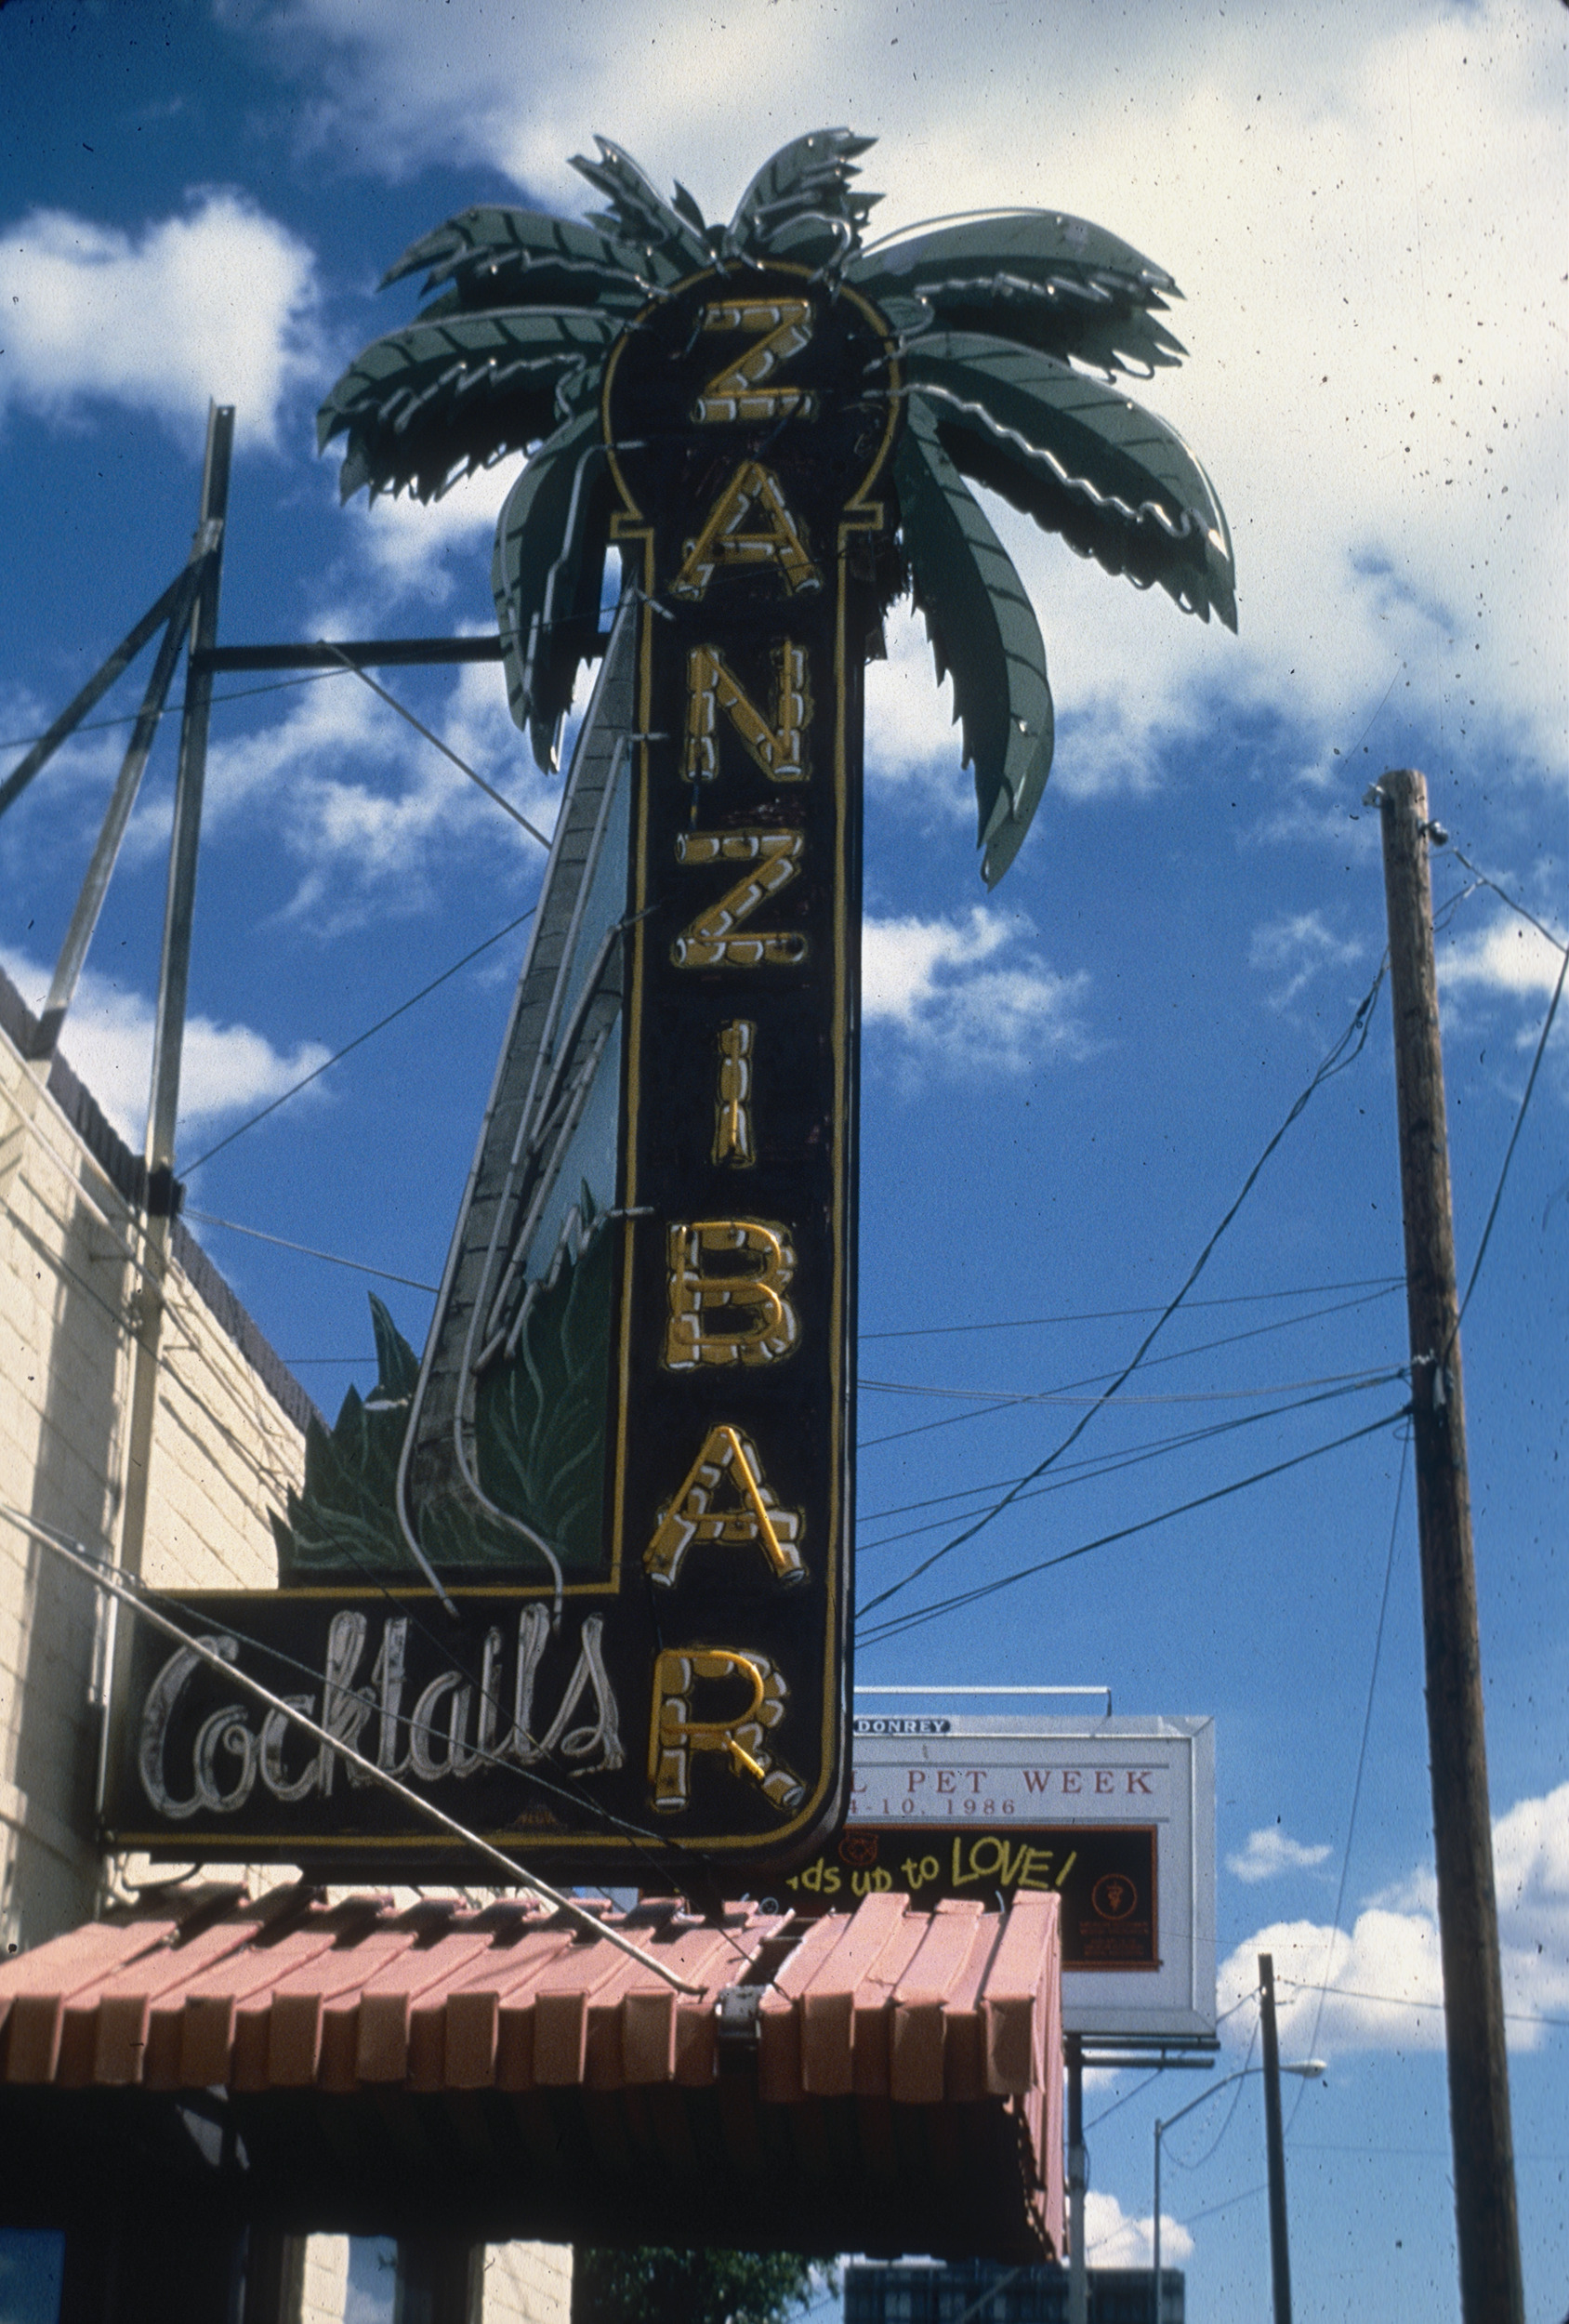 Slide of the Zanzibar Lounge, Reno, Nevada, 1986